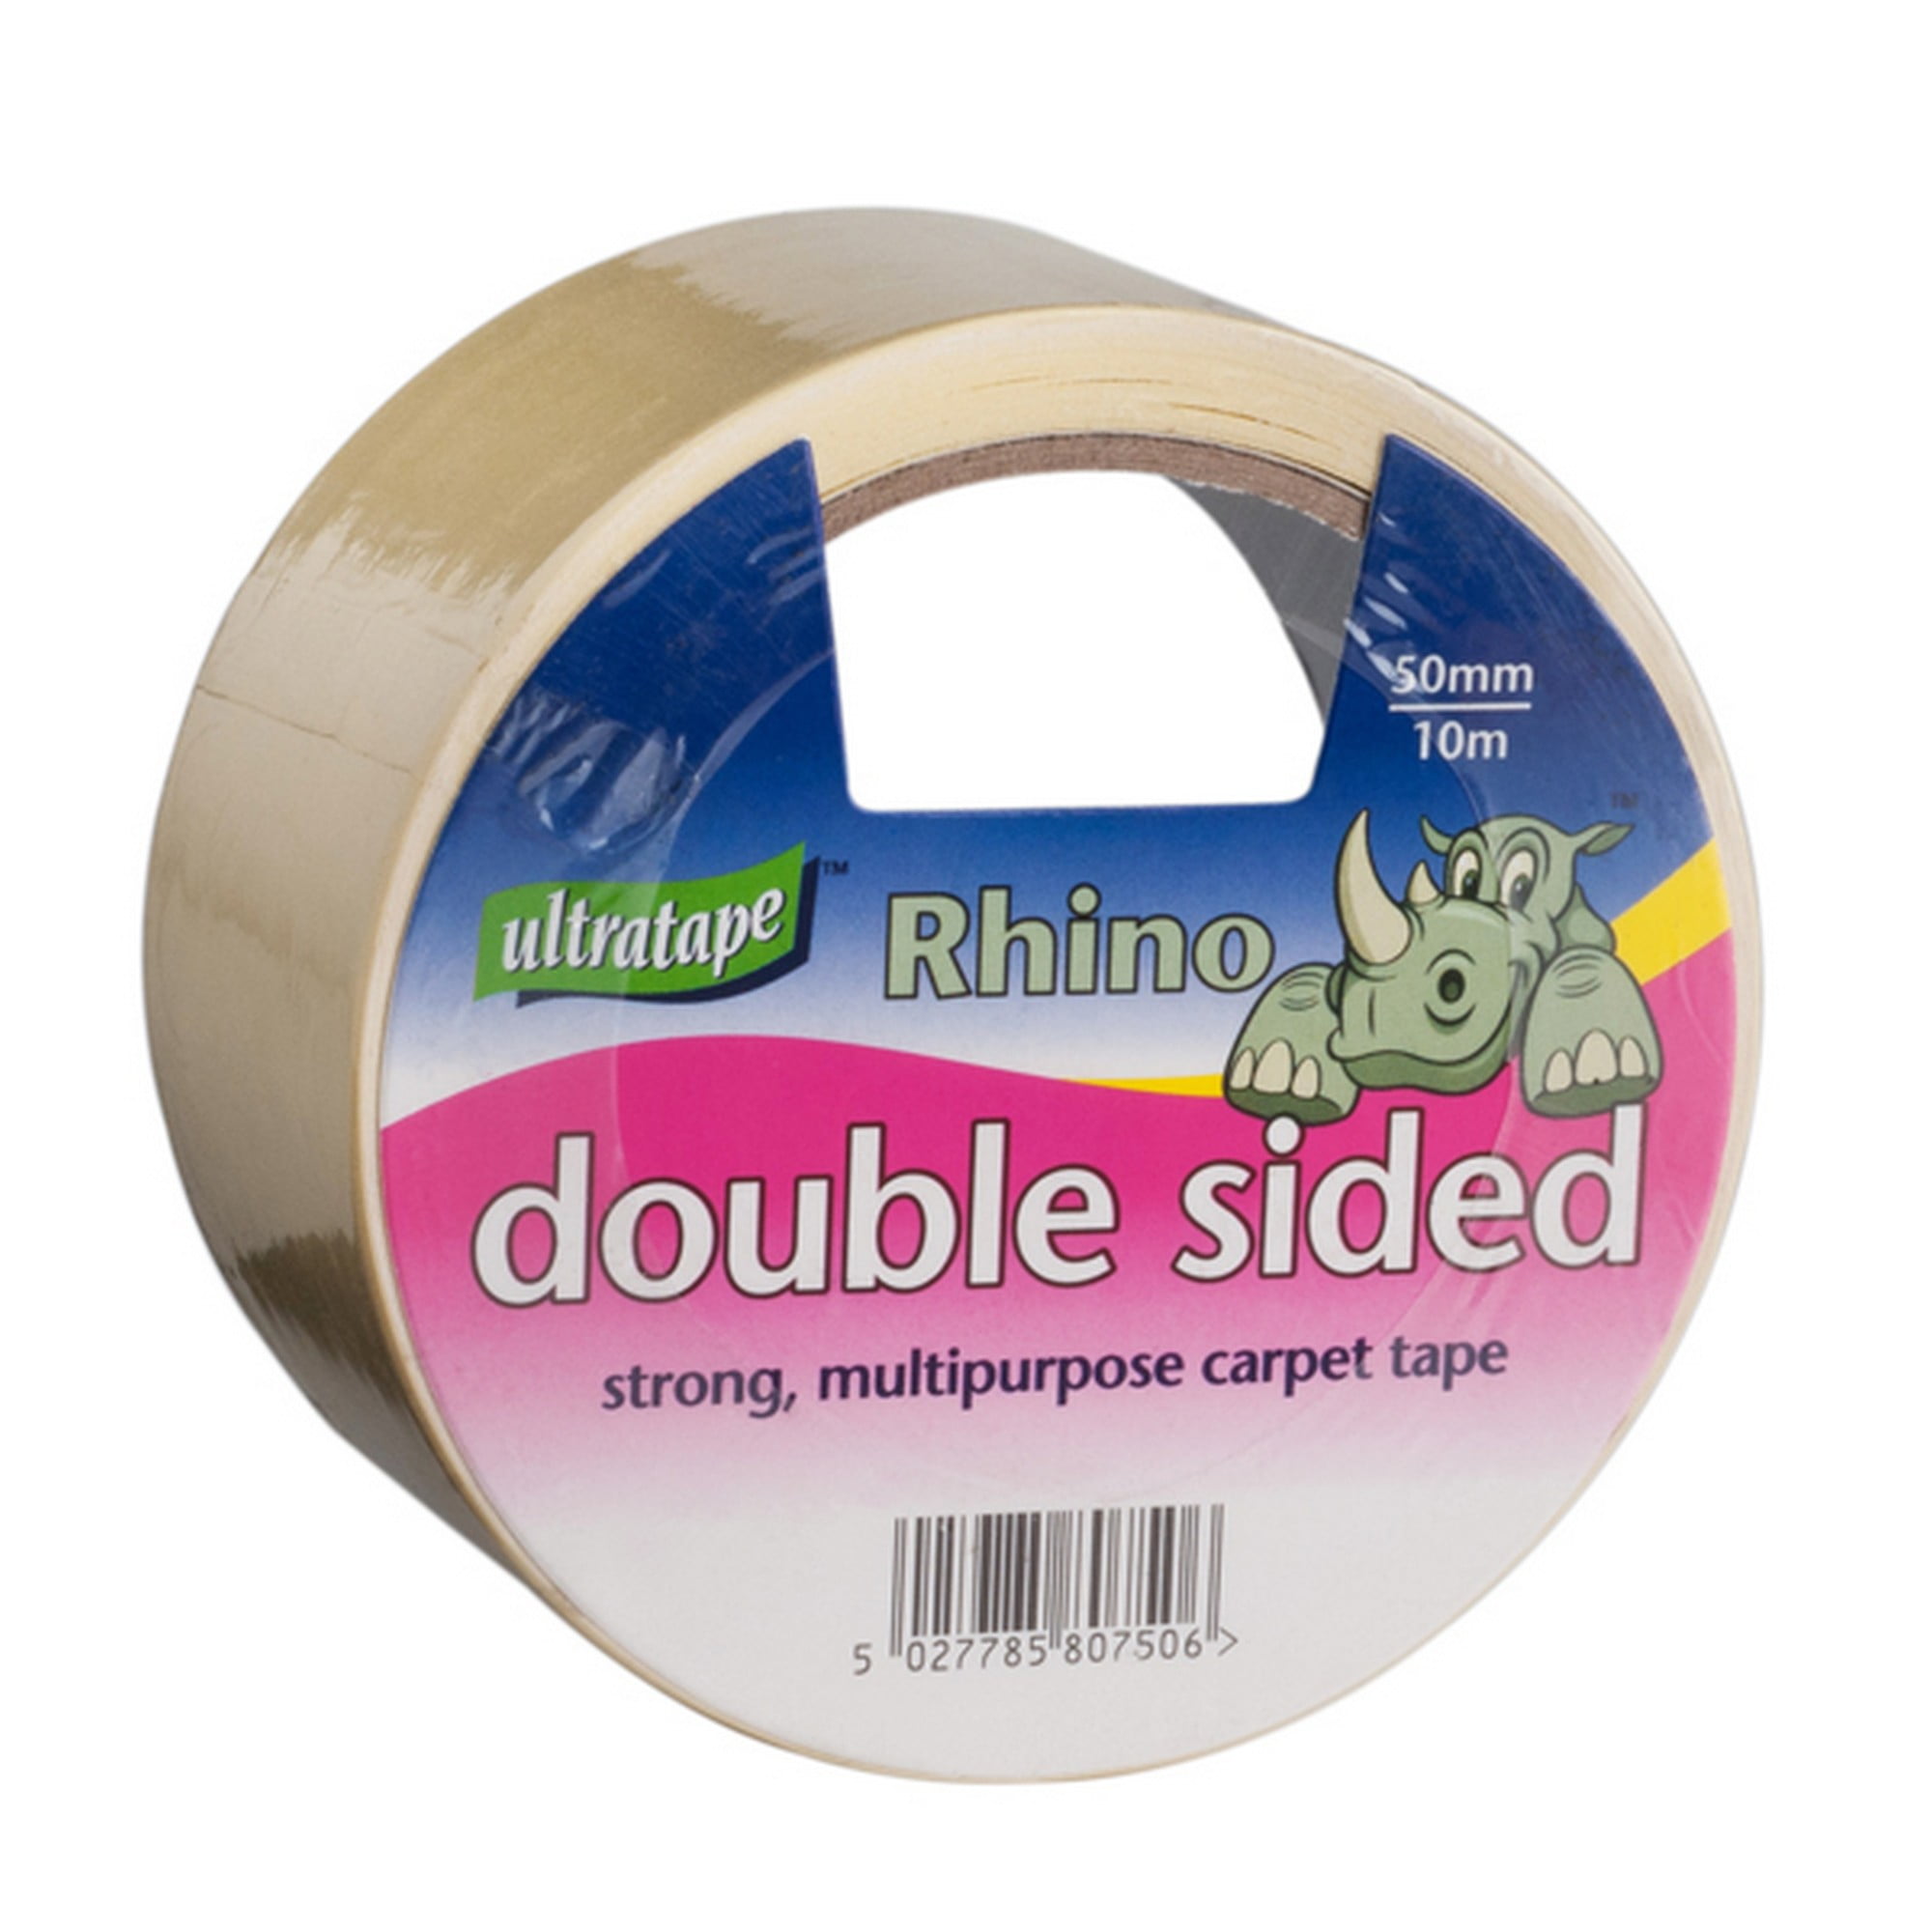 Ultratape Rhino Double Sided Multi-purpose Strong Carpet Tape Heavy Duty 6,12,24 